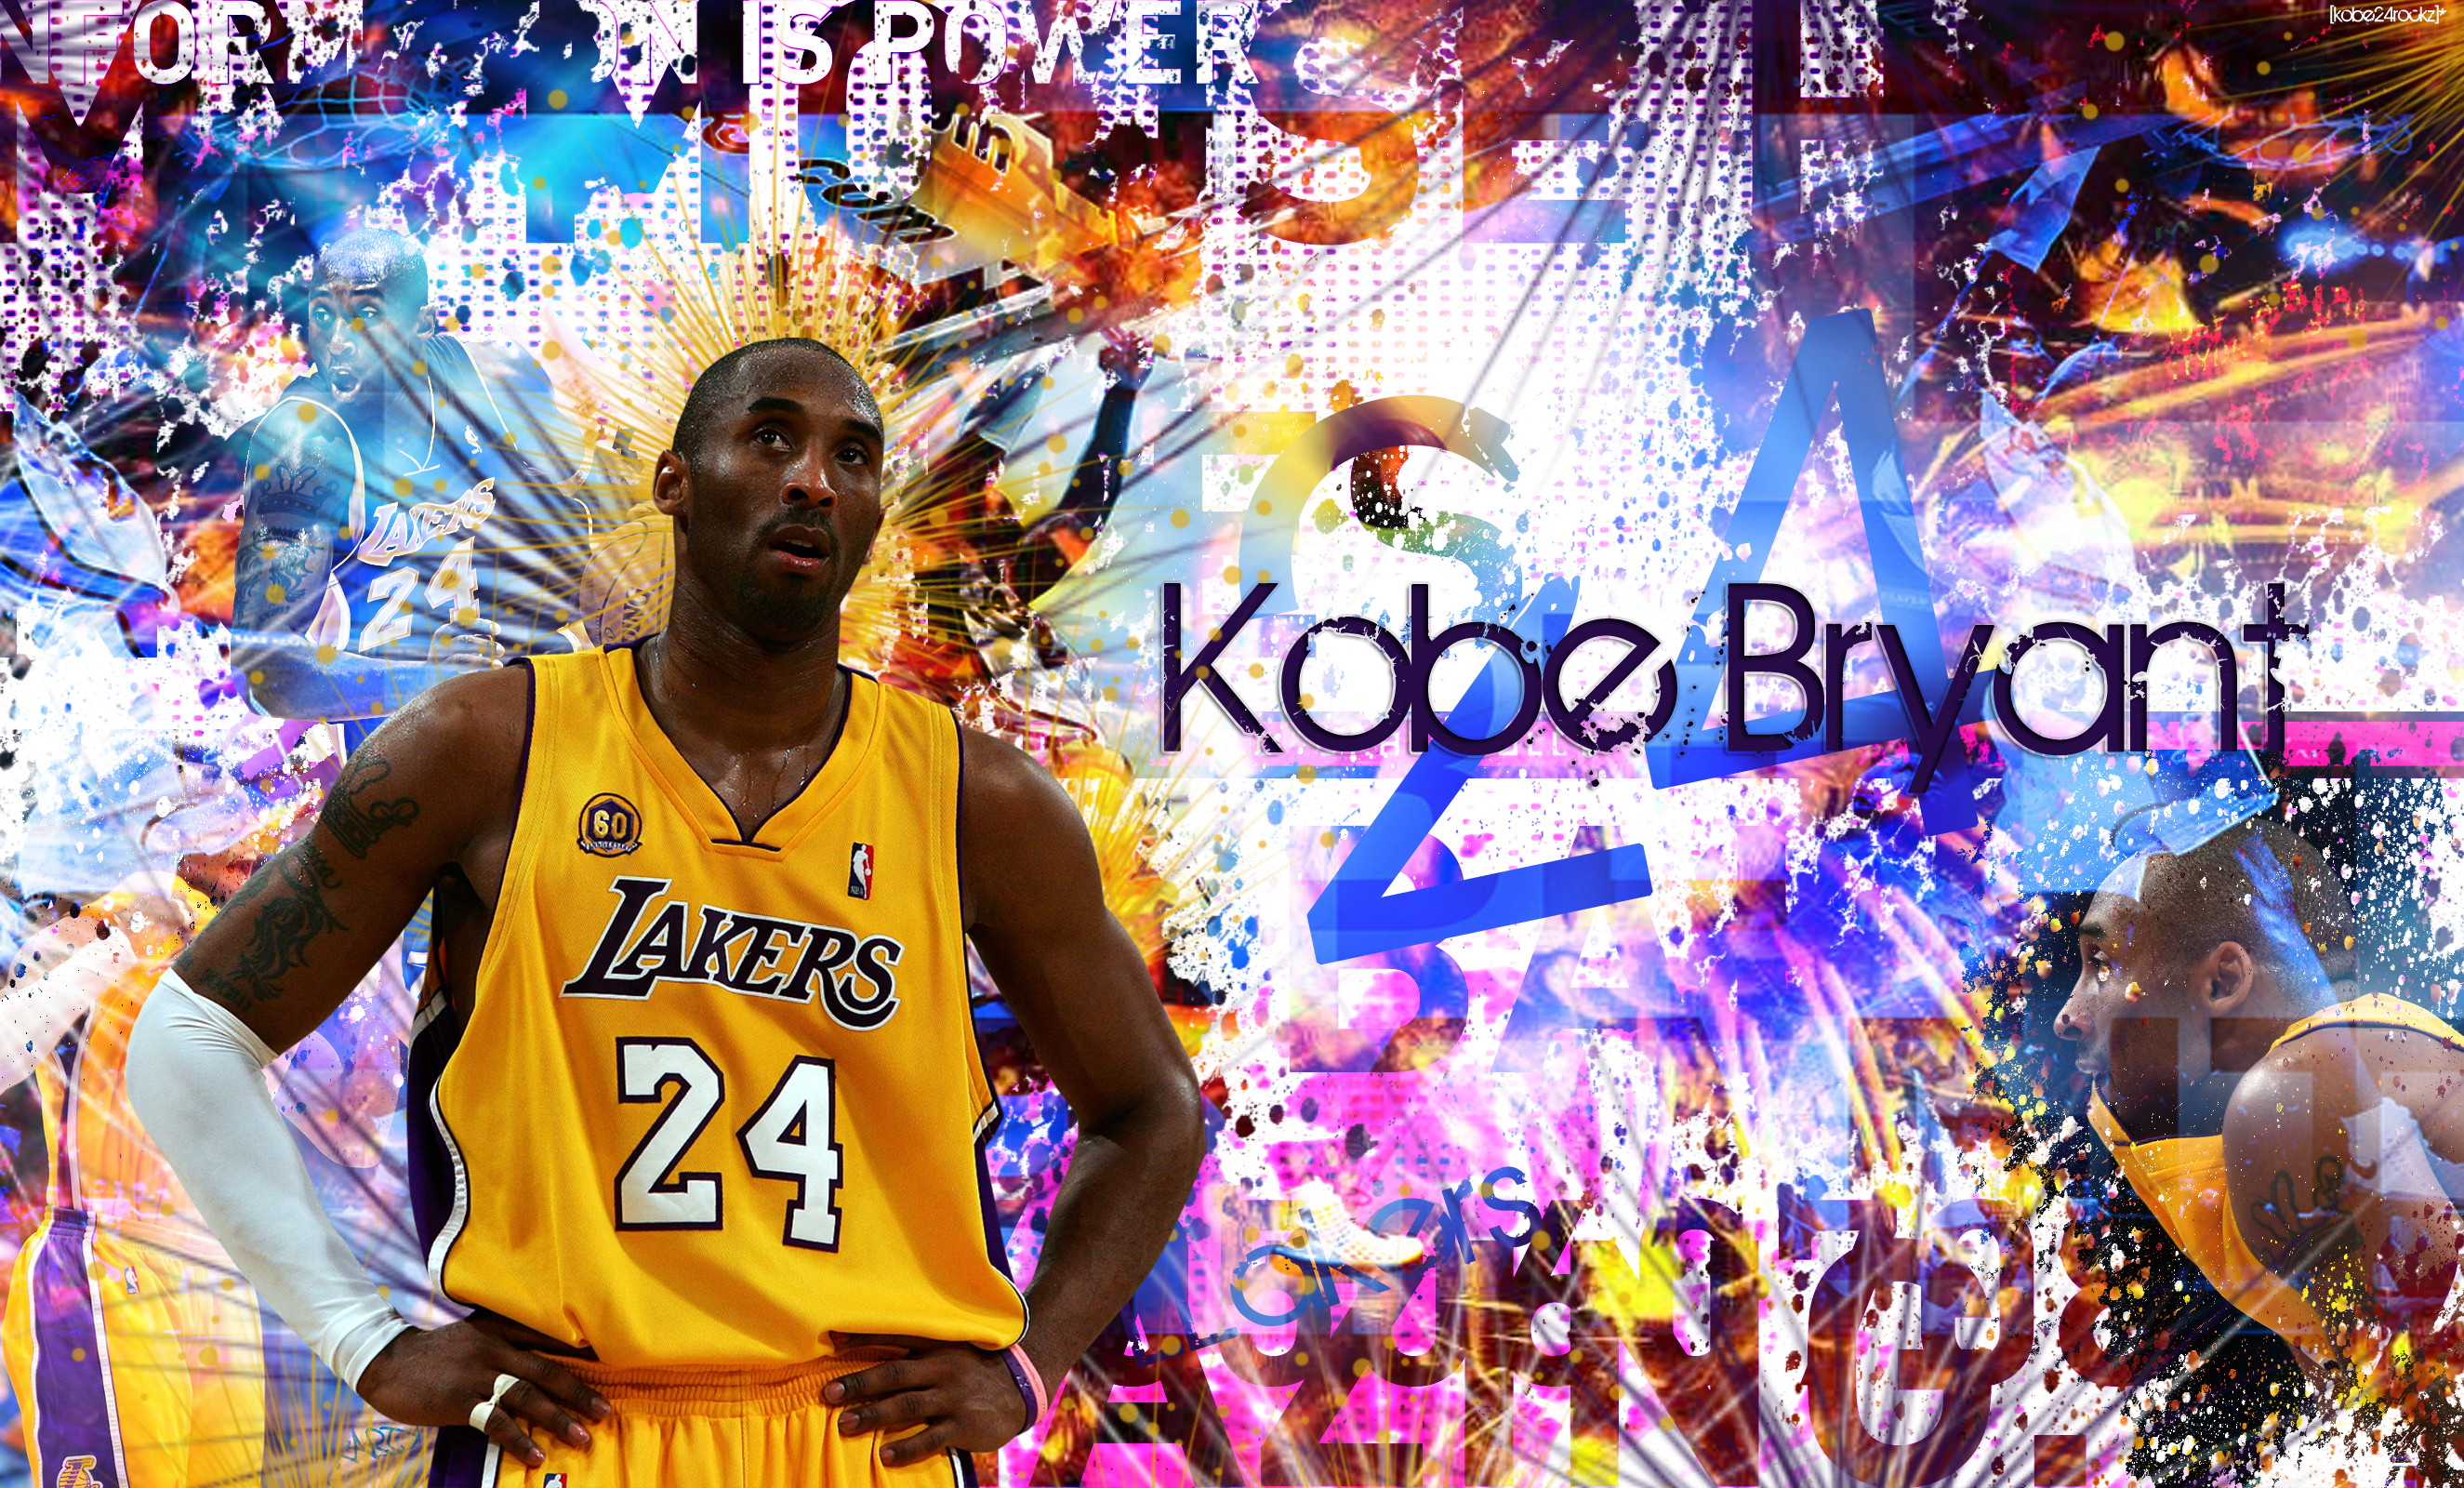 kobe bryant wallpaper,basketball player,team sport,basketball,graphic design,fan